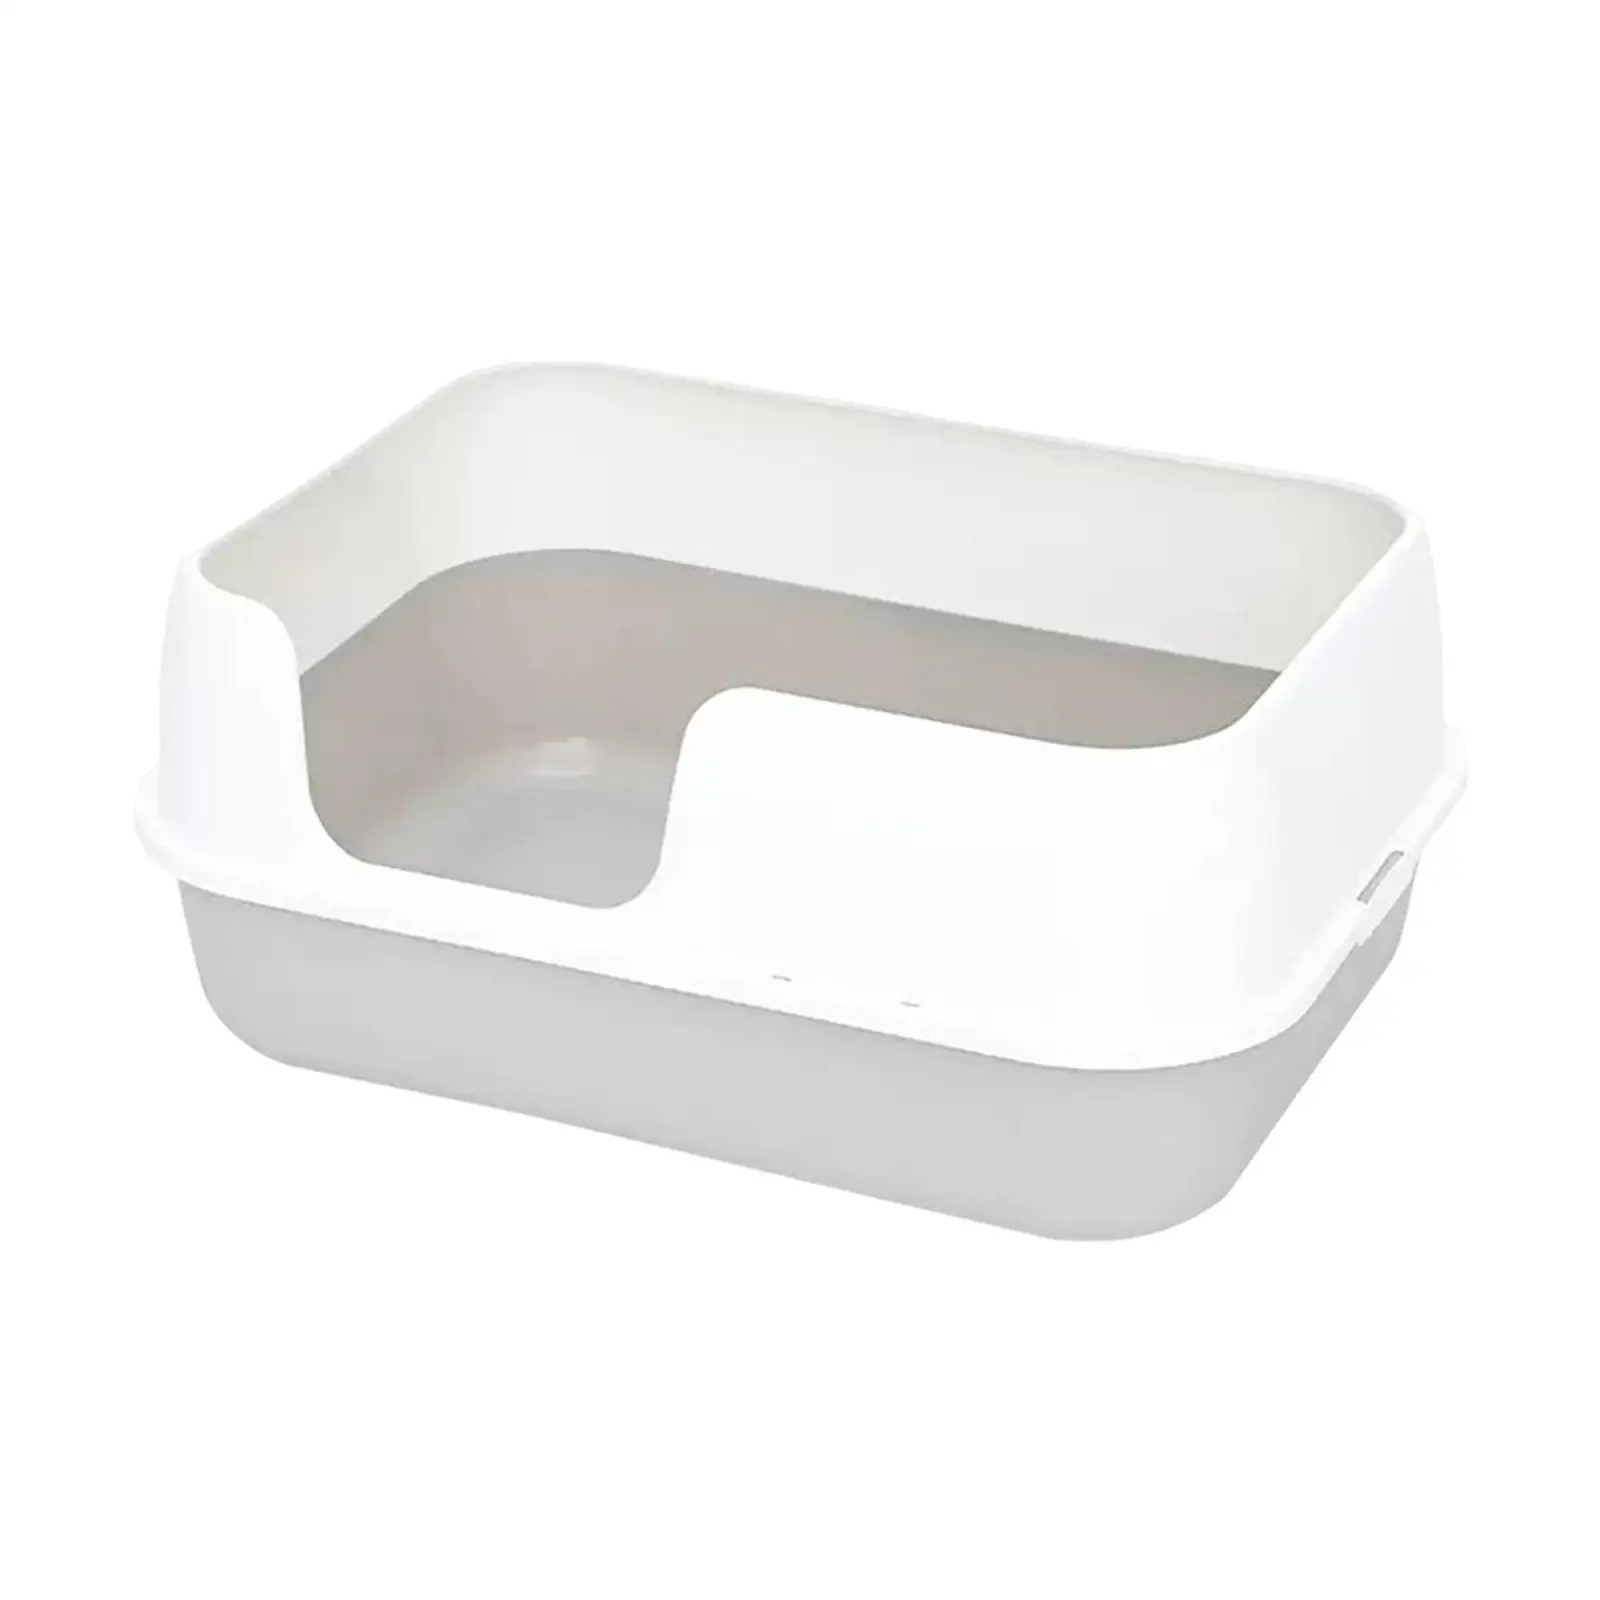 Cat Litter Box Tray Toilet Semi Enclosed Measure 24.4x17.3x10.2inch Portable